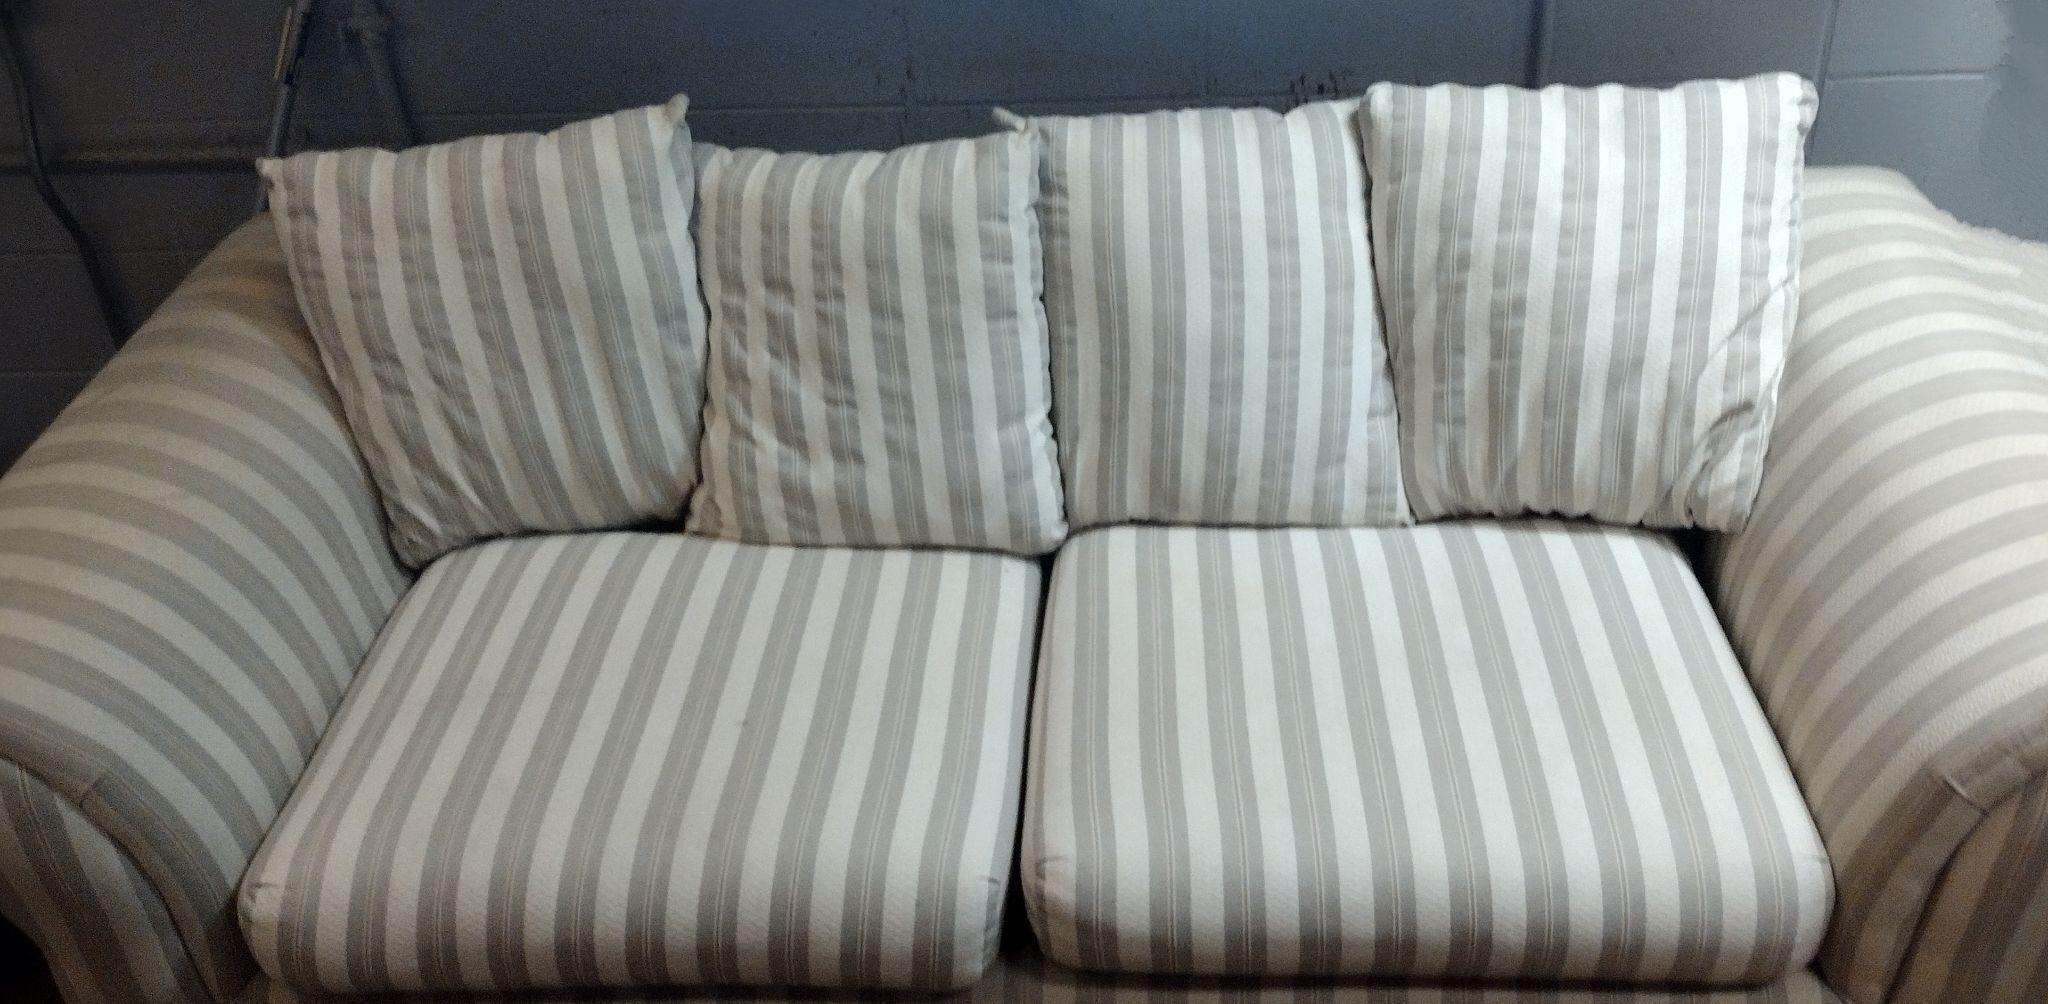 Loveseat Sofa Grey & White Striped Pattern COMFY!